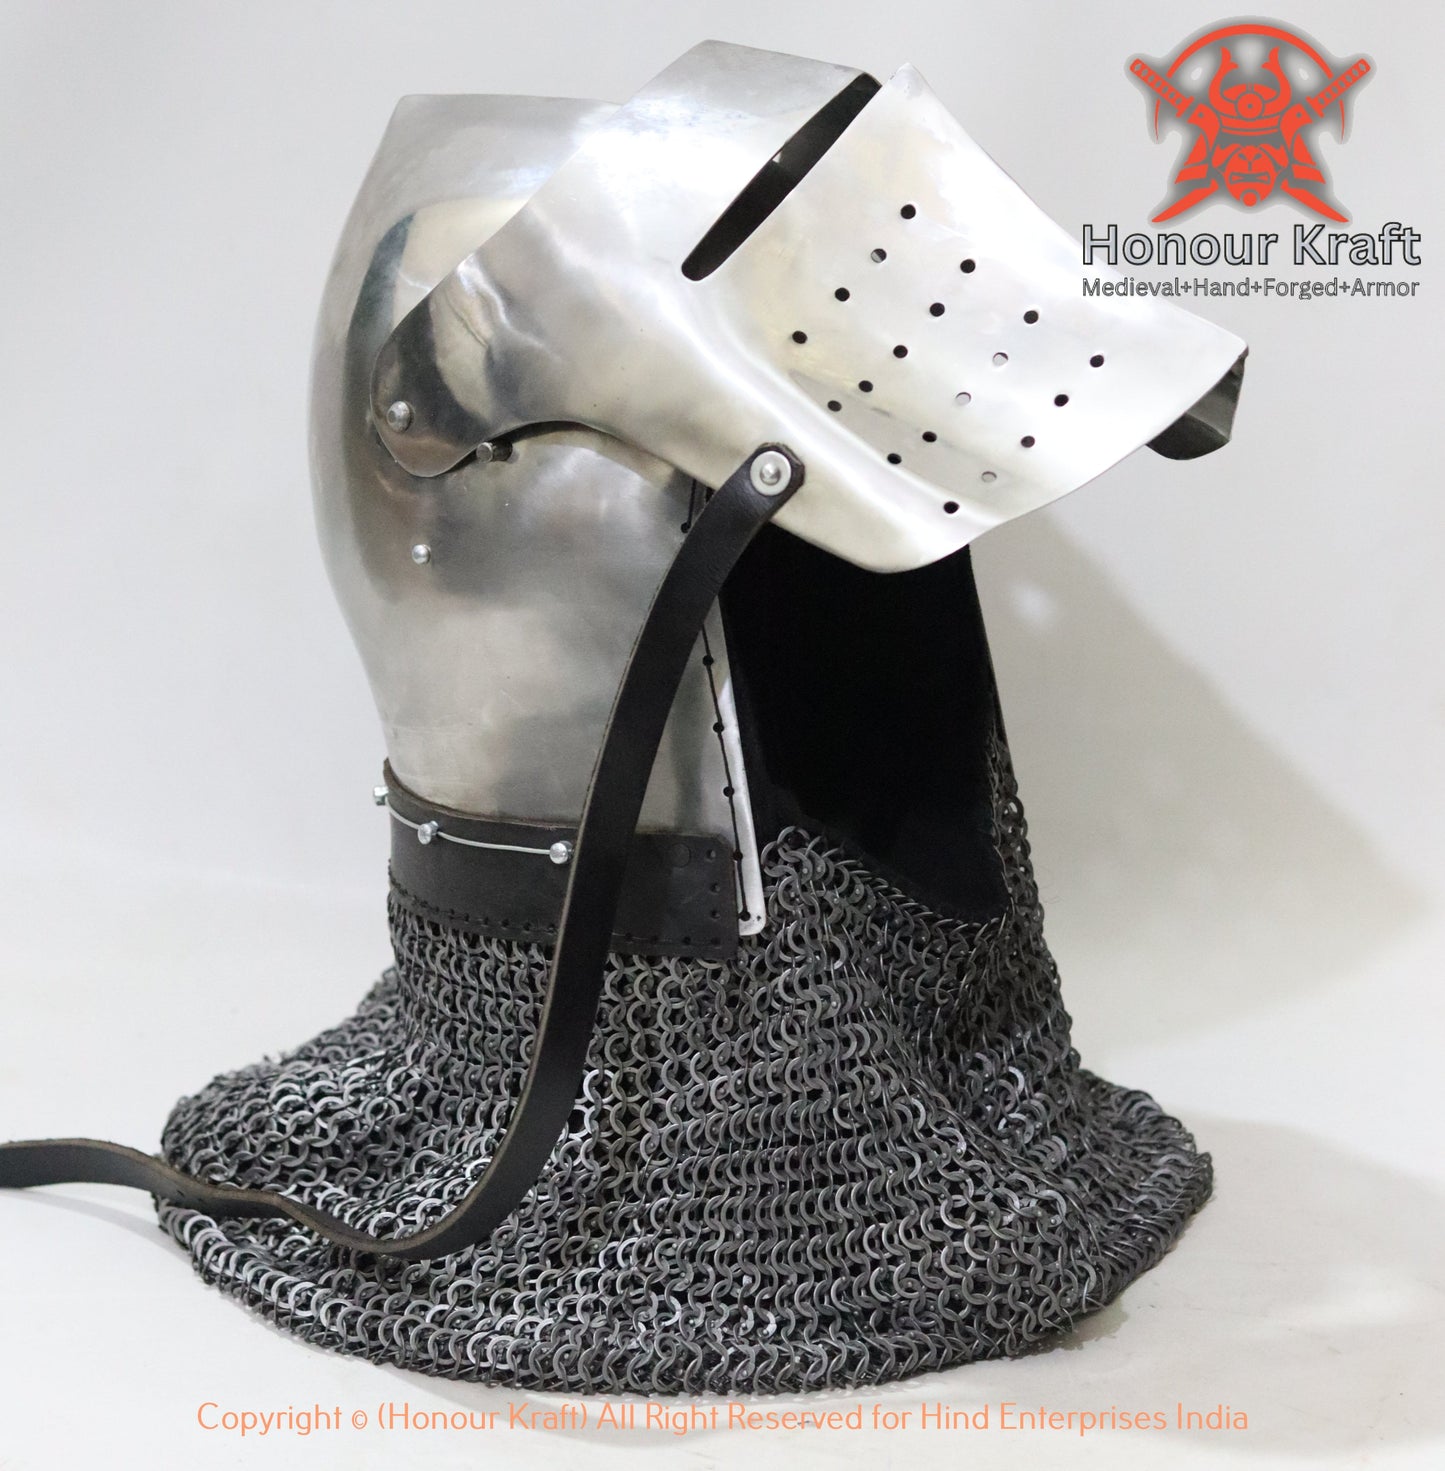 Bascinet Italian Helmet Armor